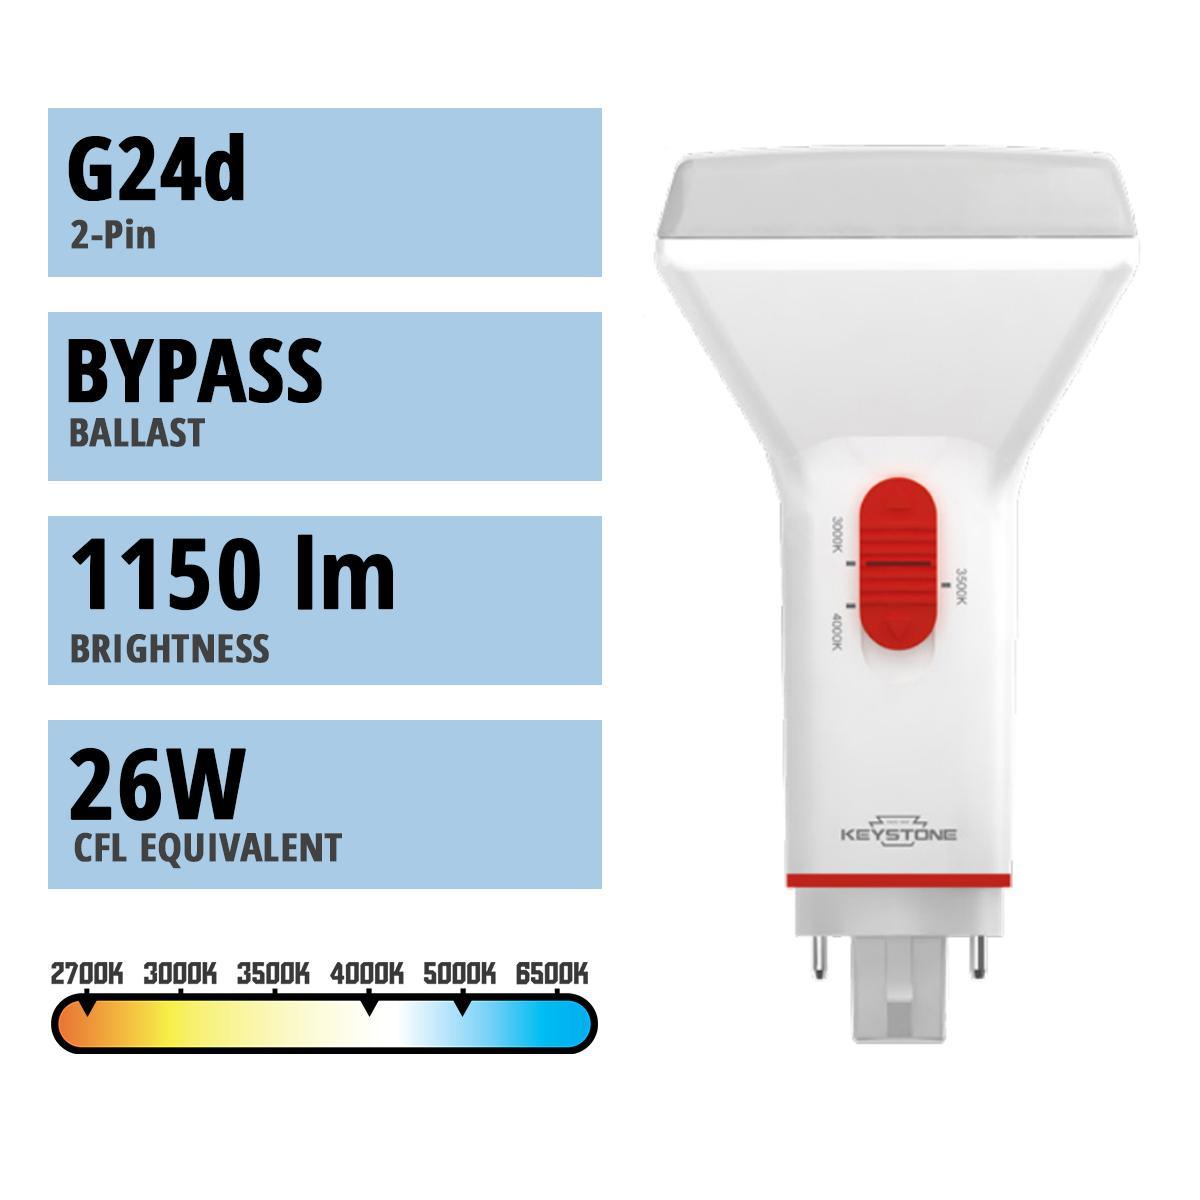 2 Pin PL LED Bulb, 8.5 Watt 1150 Lumens, Selectable CCT 30K/35K/40K, Vertical, Replaces 26W CFL, G24d Base, Tybe B Ballast Bypass